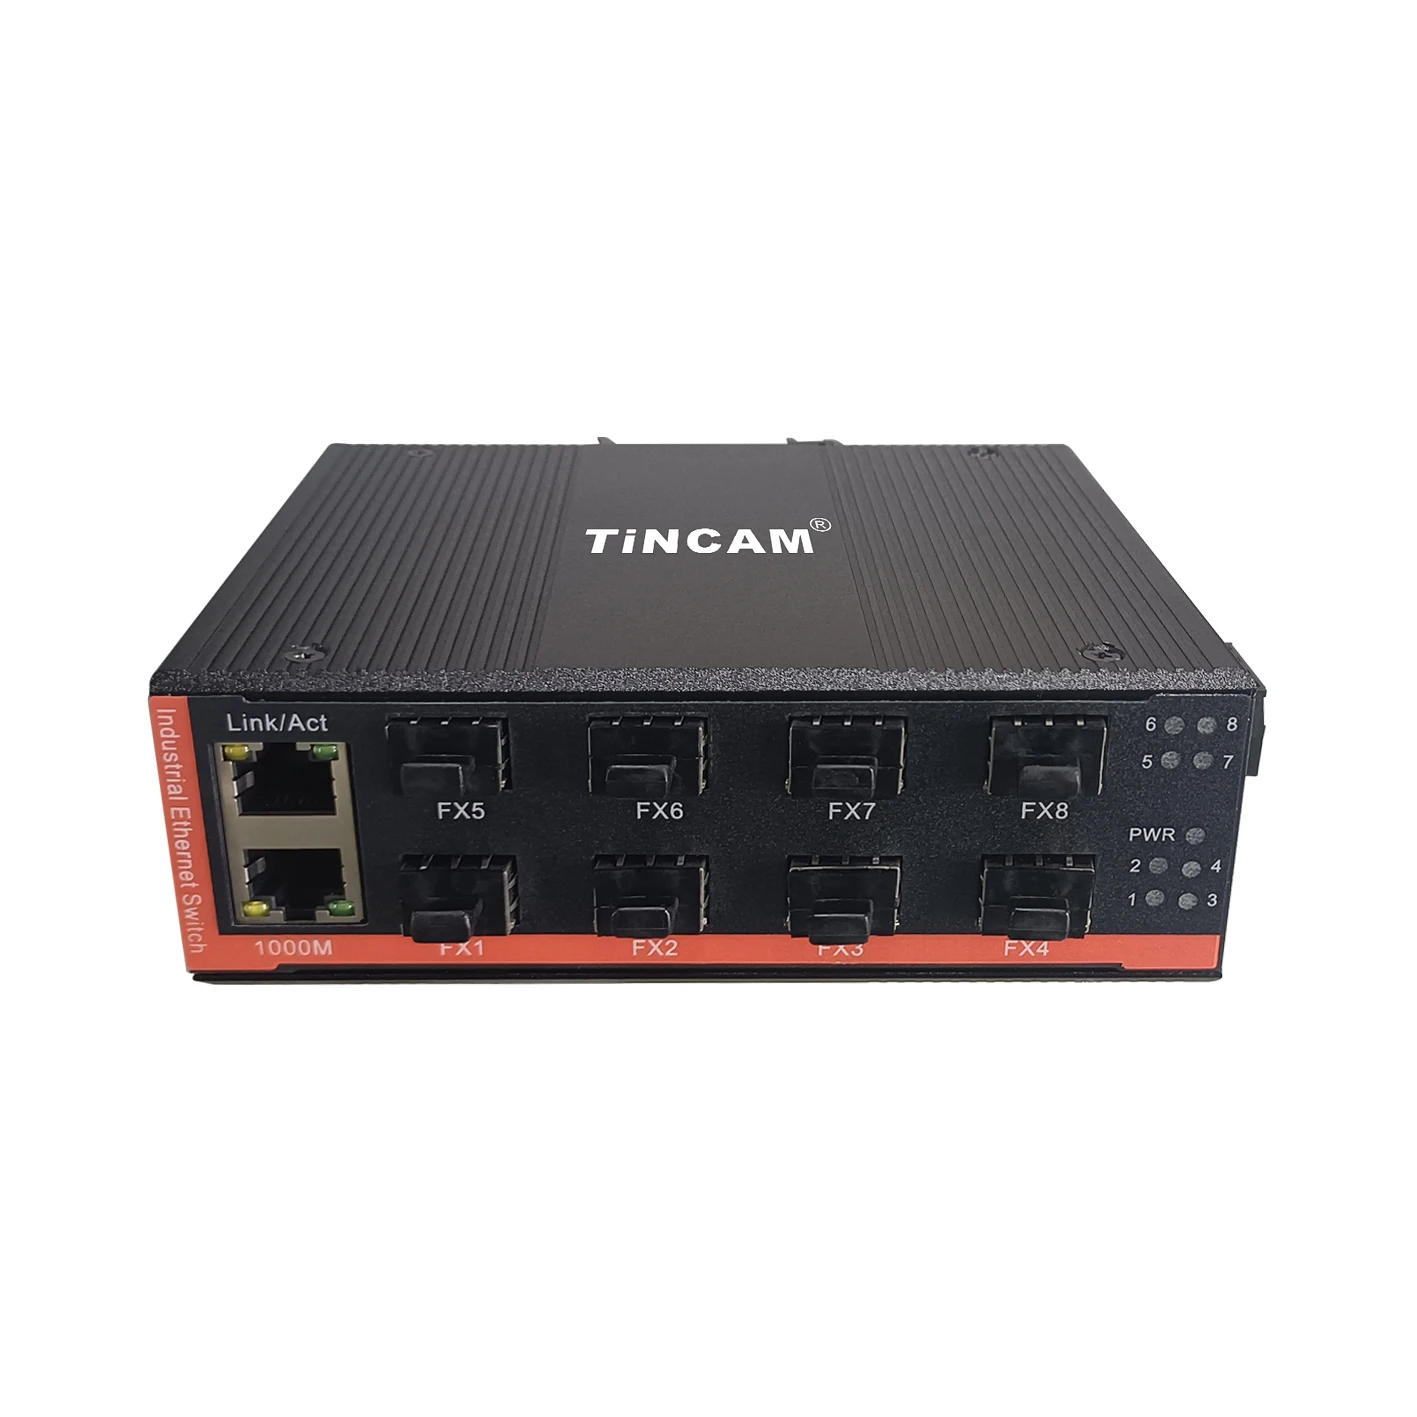 TiNCAM Gigabit 10Port Access 8*SFP+2*RJ45 Industrial Network Switch Aggregation Industrial Media Converter